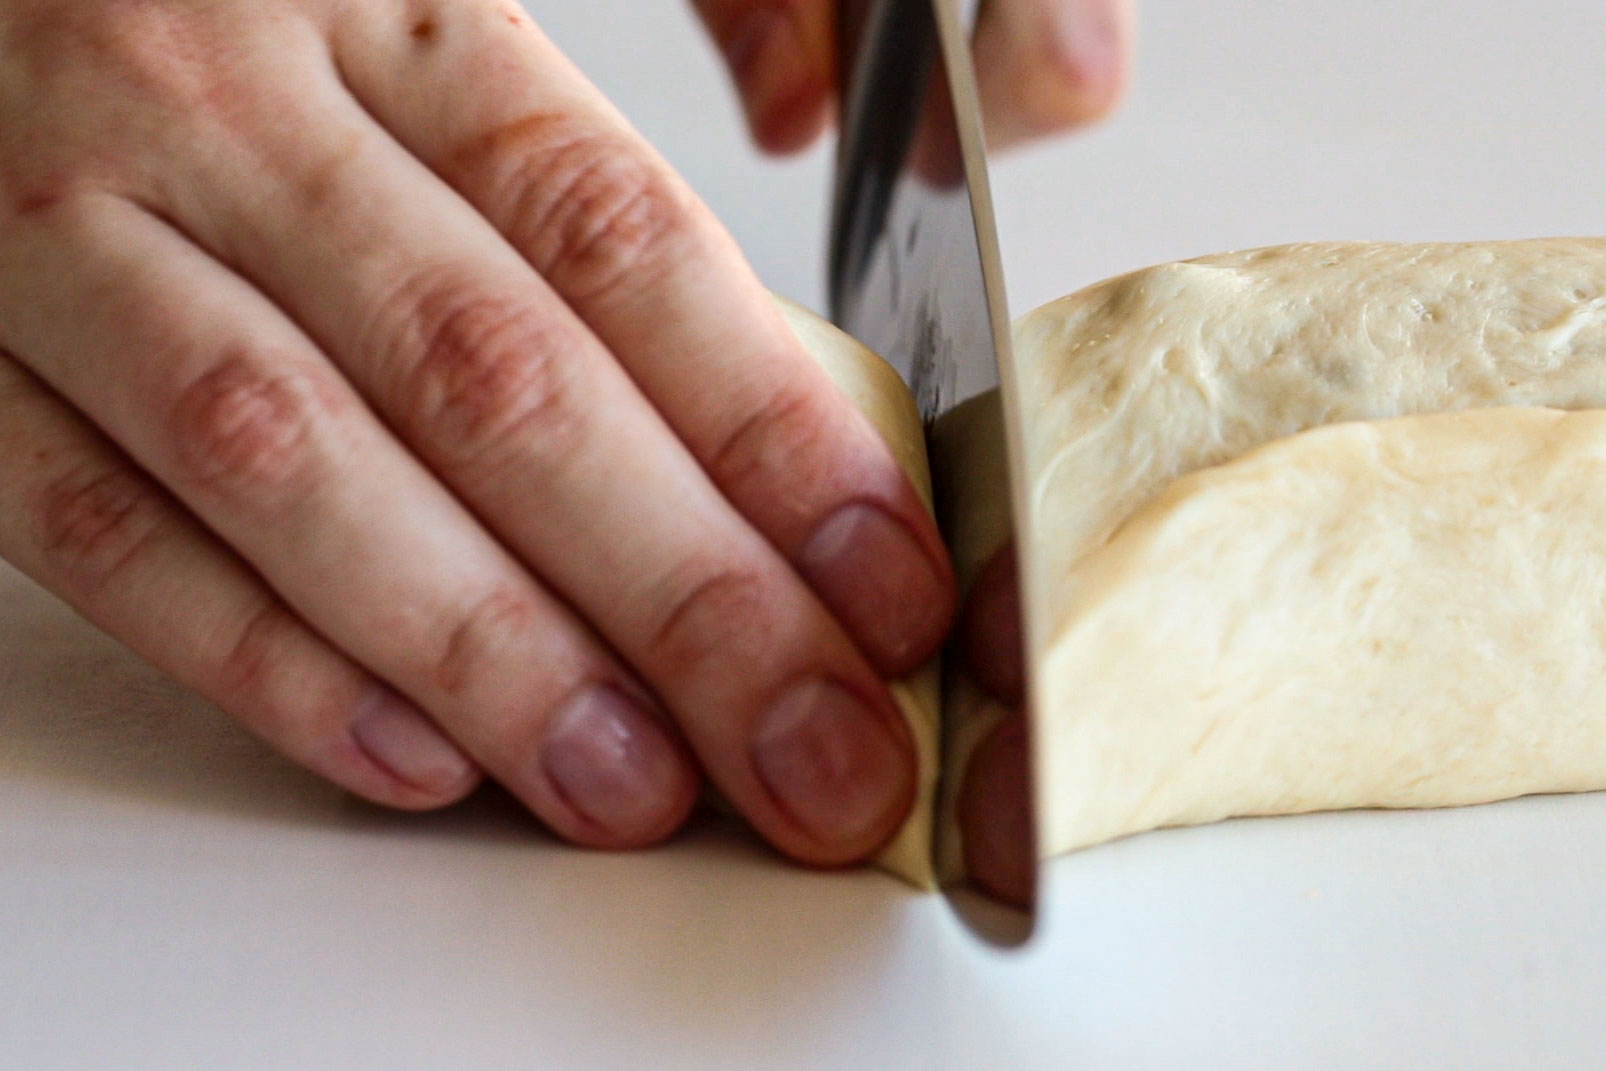 Cutting the rolls.